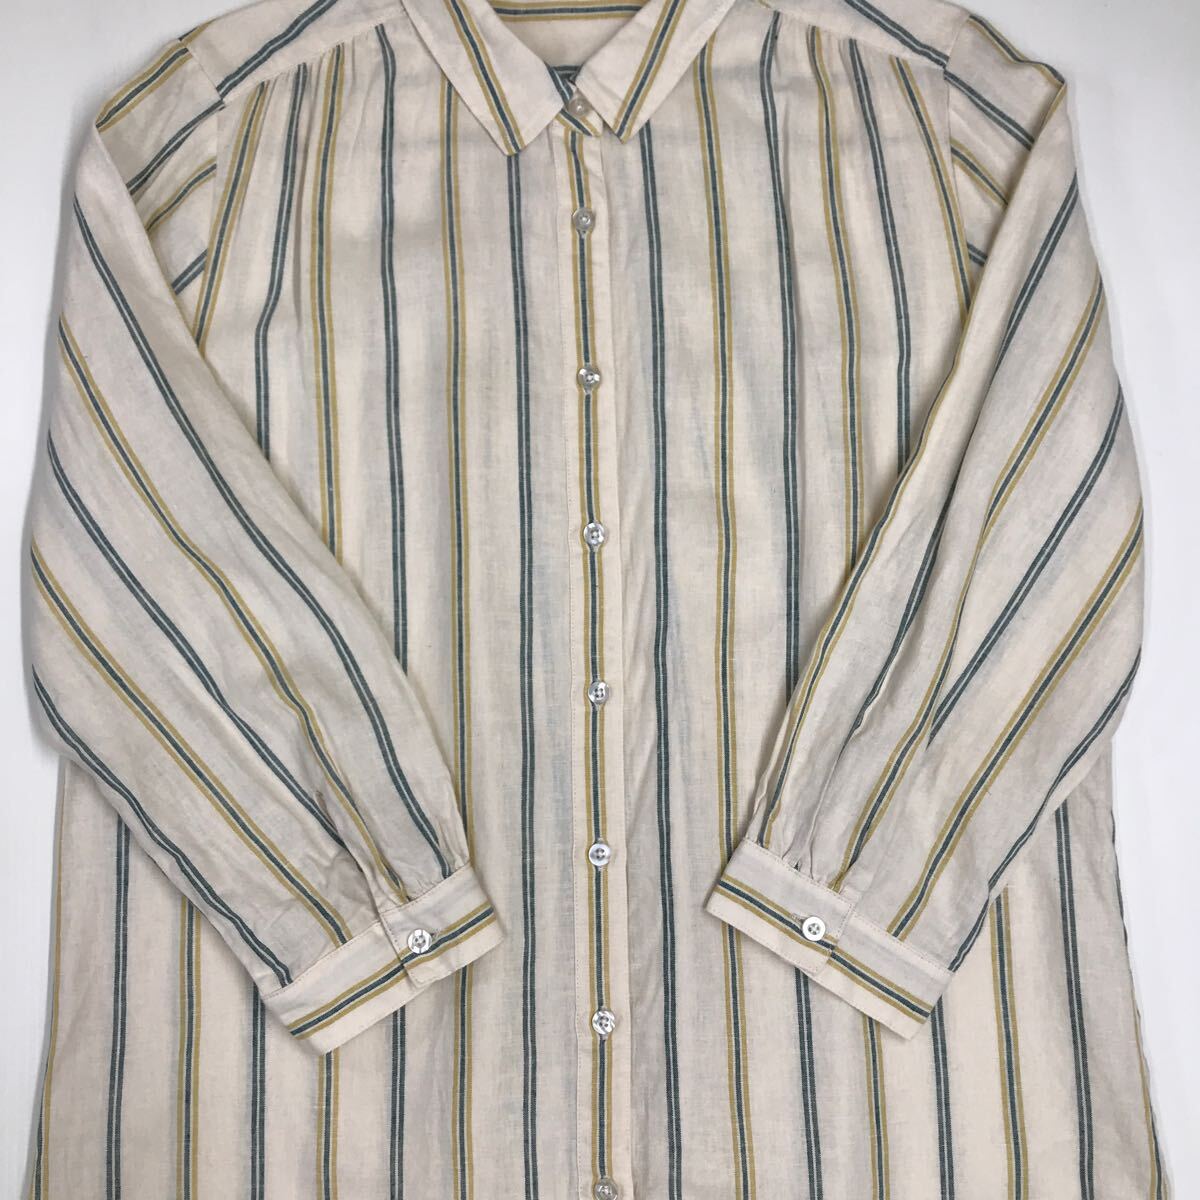 Golden Bear Golden Bear flax . tunic shirt stripe pattern 9 part sleeve lady's L size 34-93a